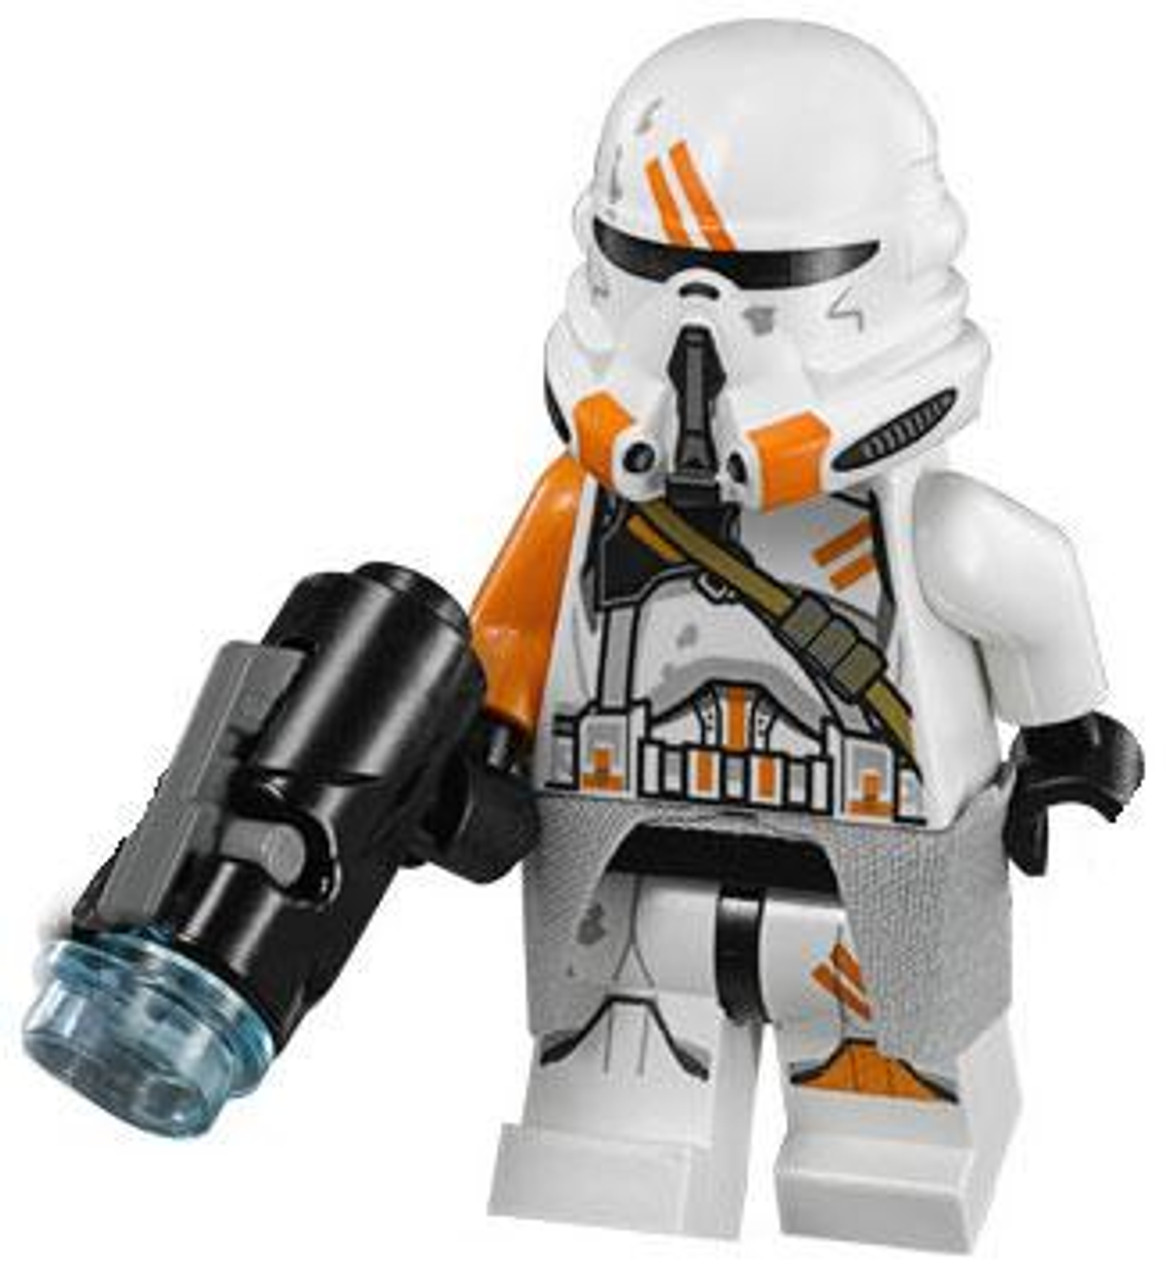 lego star wars clone figures